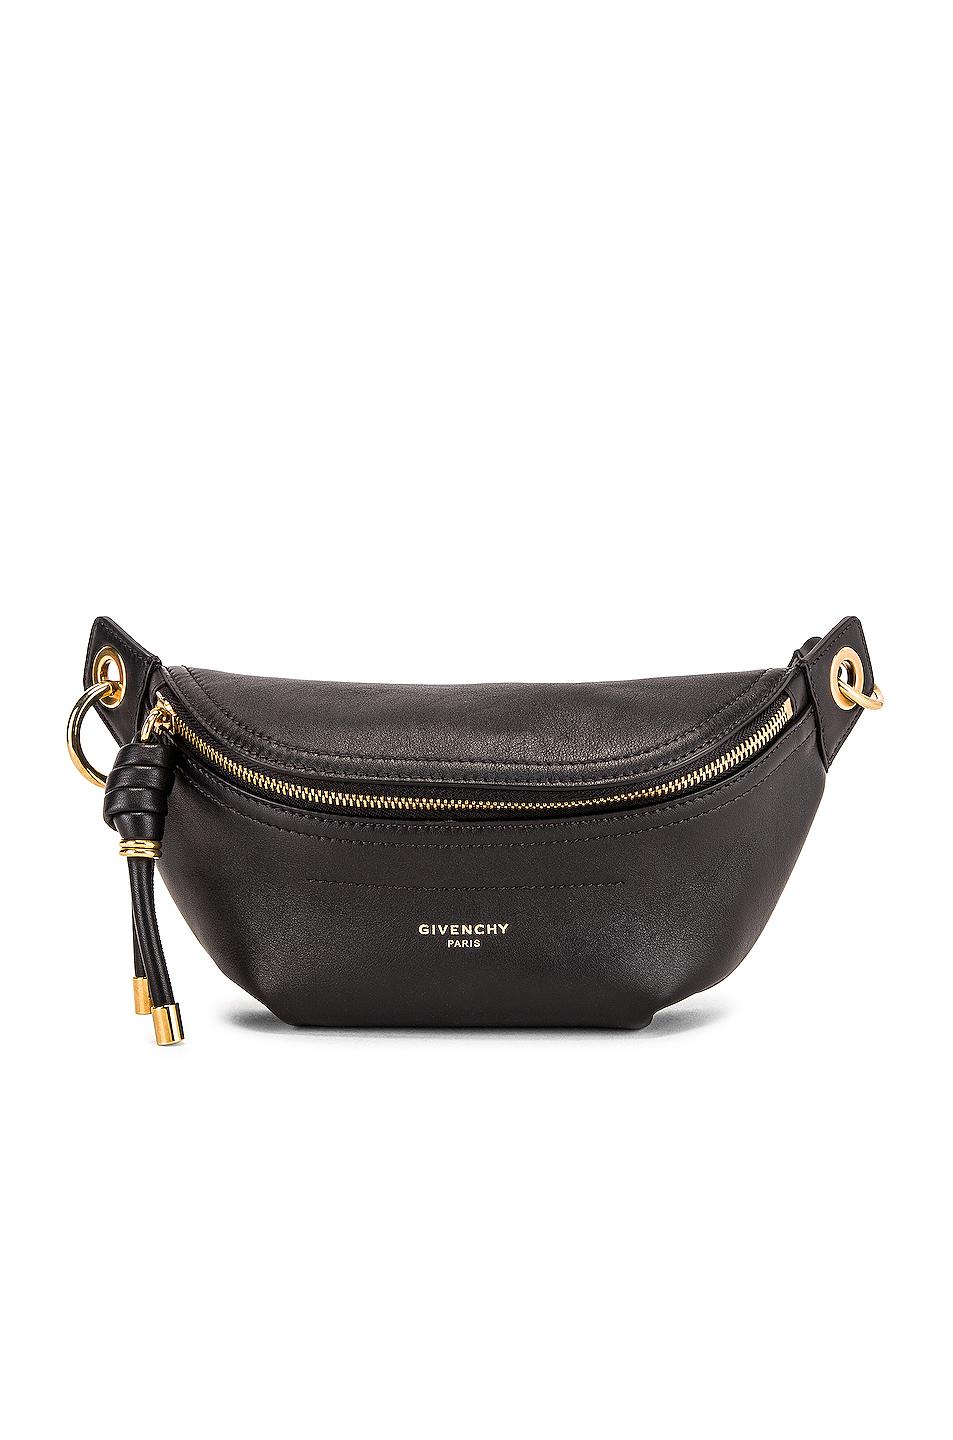 Givenchy Mini Whip Belt Bag in Black - Lyst